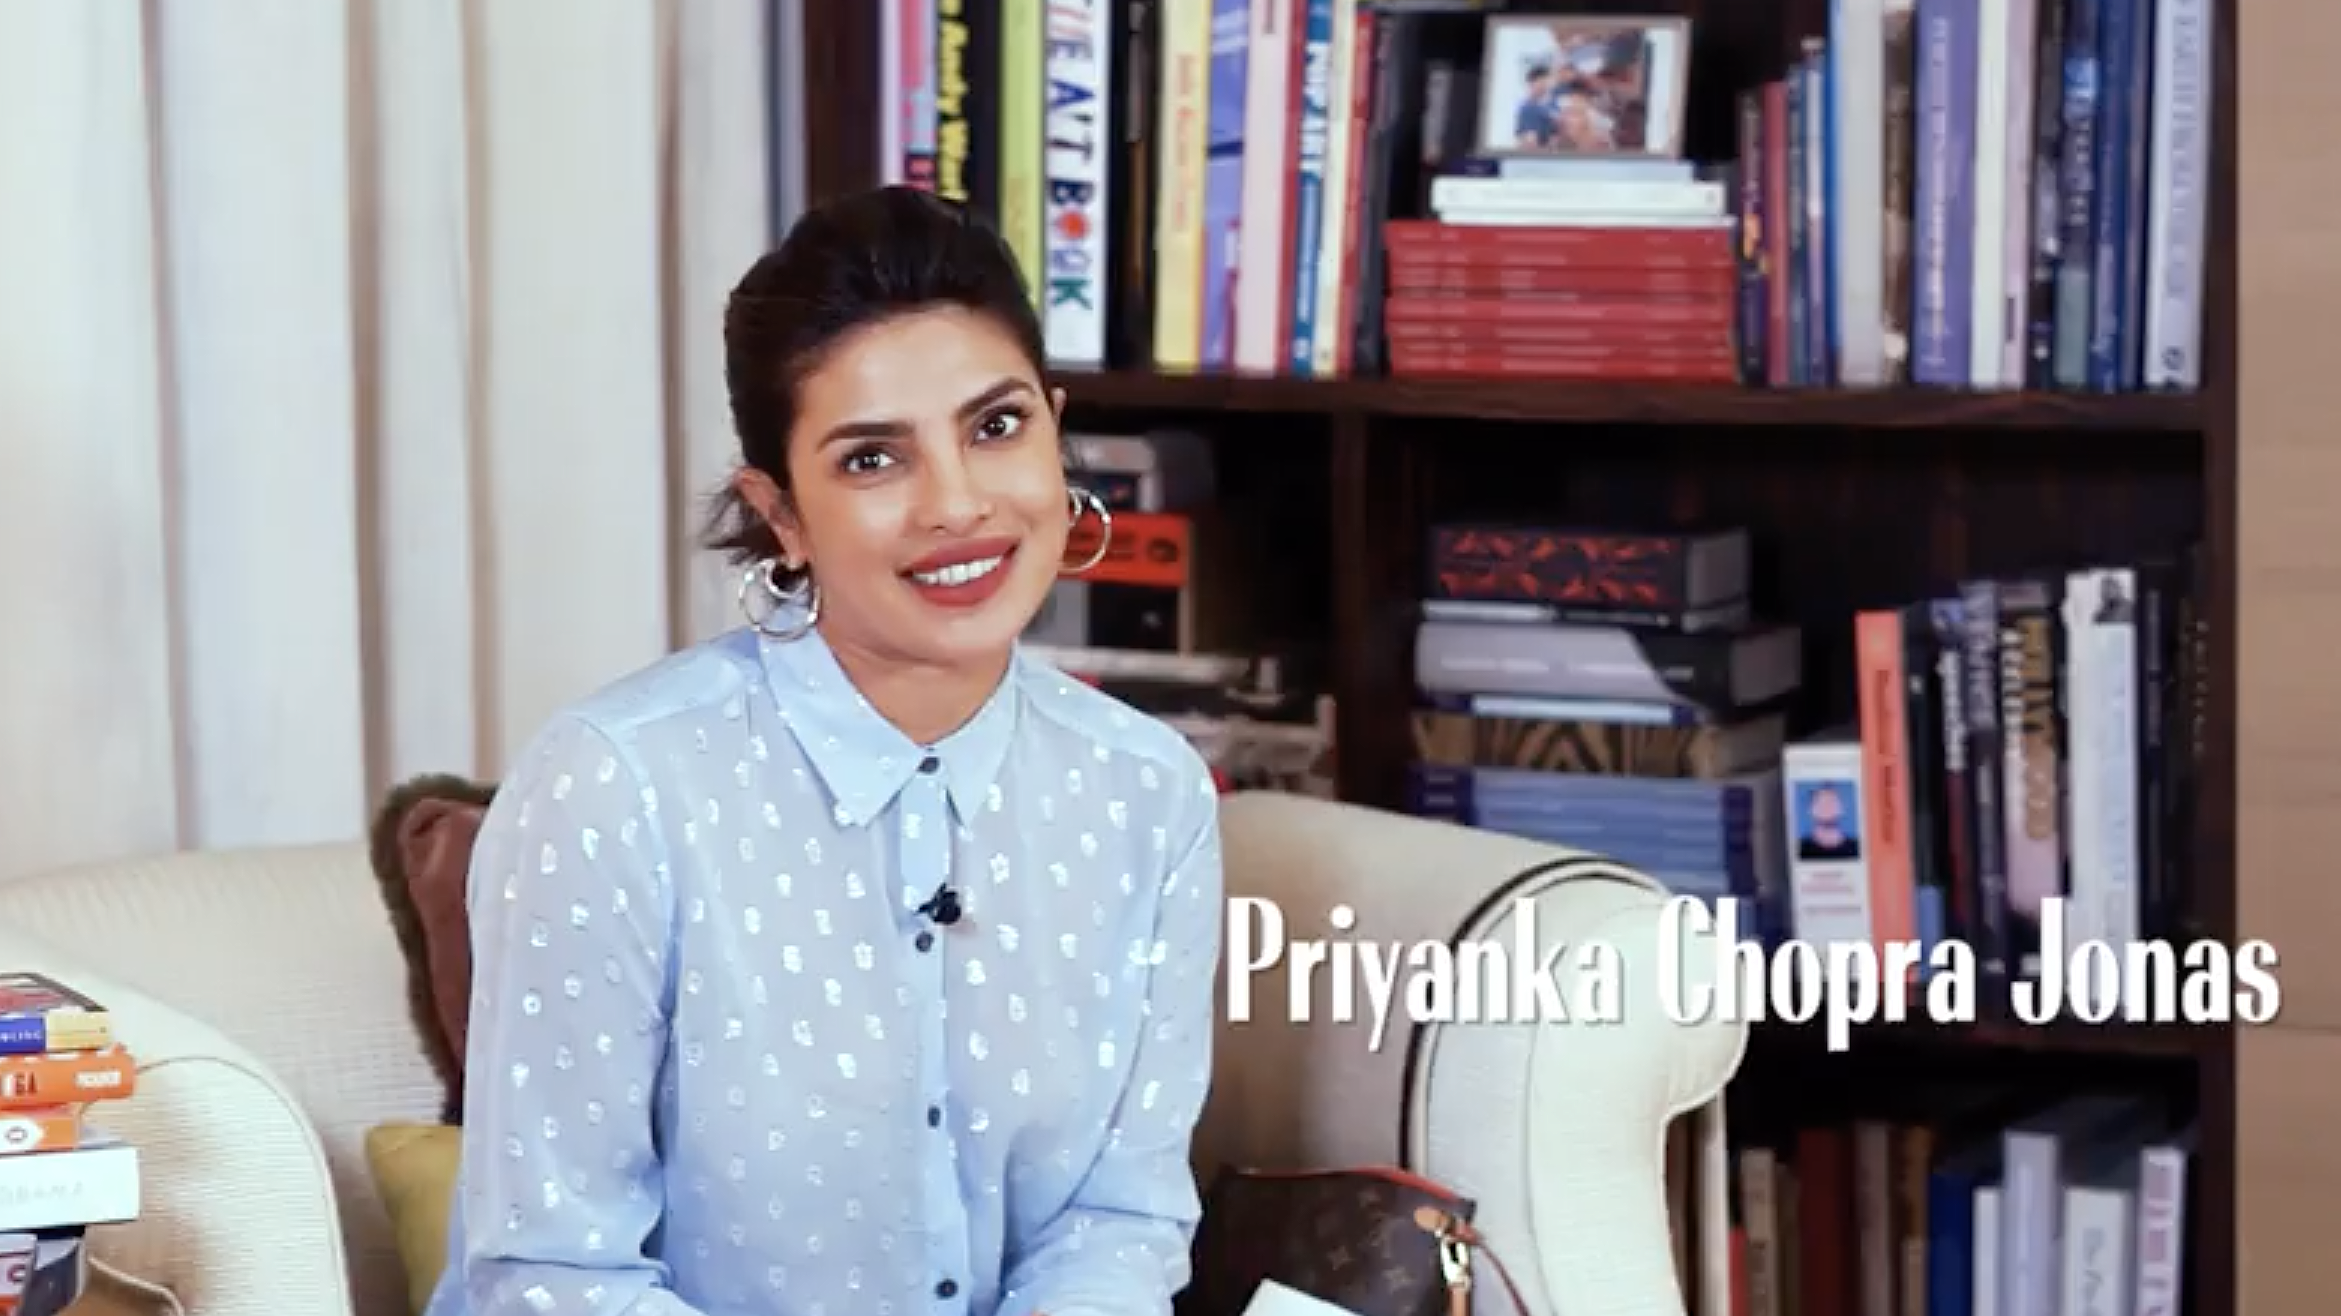 Priyanka Chopra Nude Image - Priyanka Chopra Jonas Reveals Her Favorite Books in MC's 'Shelf Portrait'  Series | Marie Claire